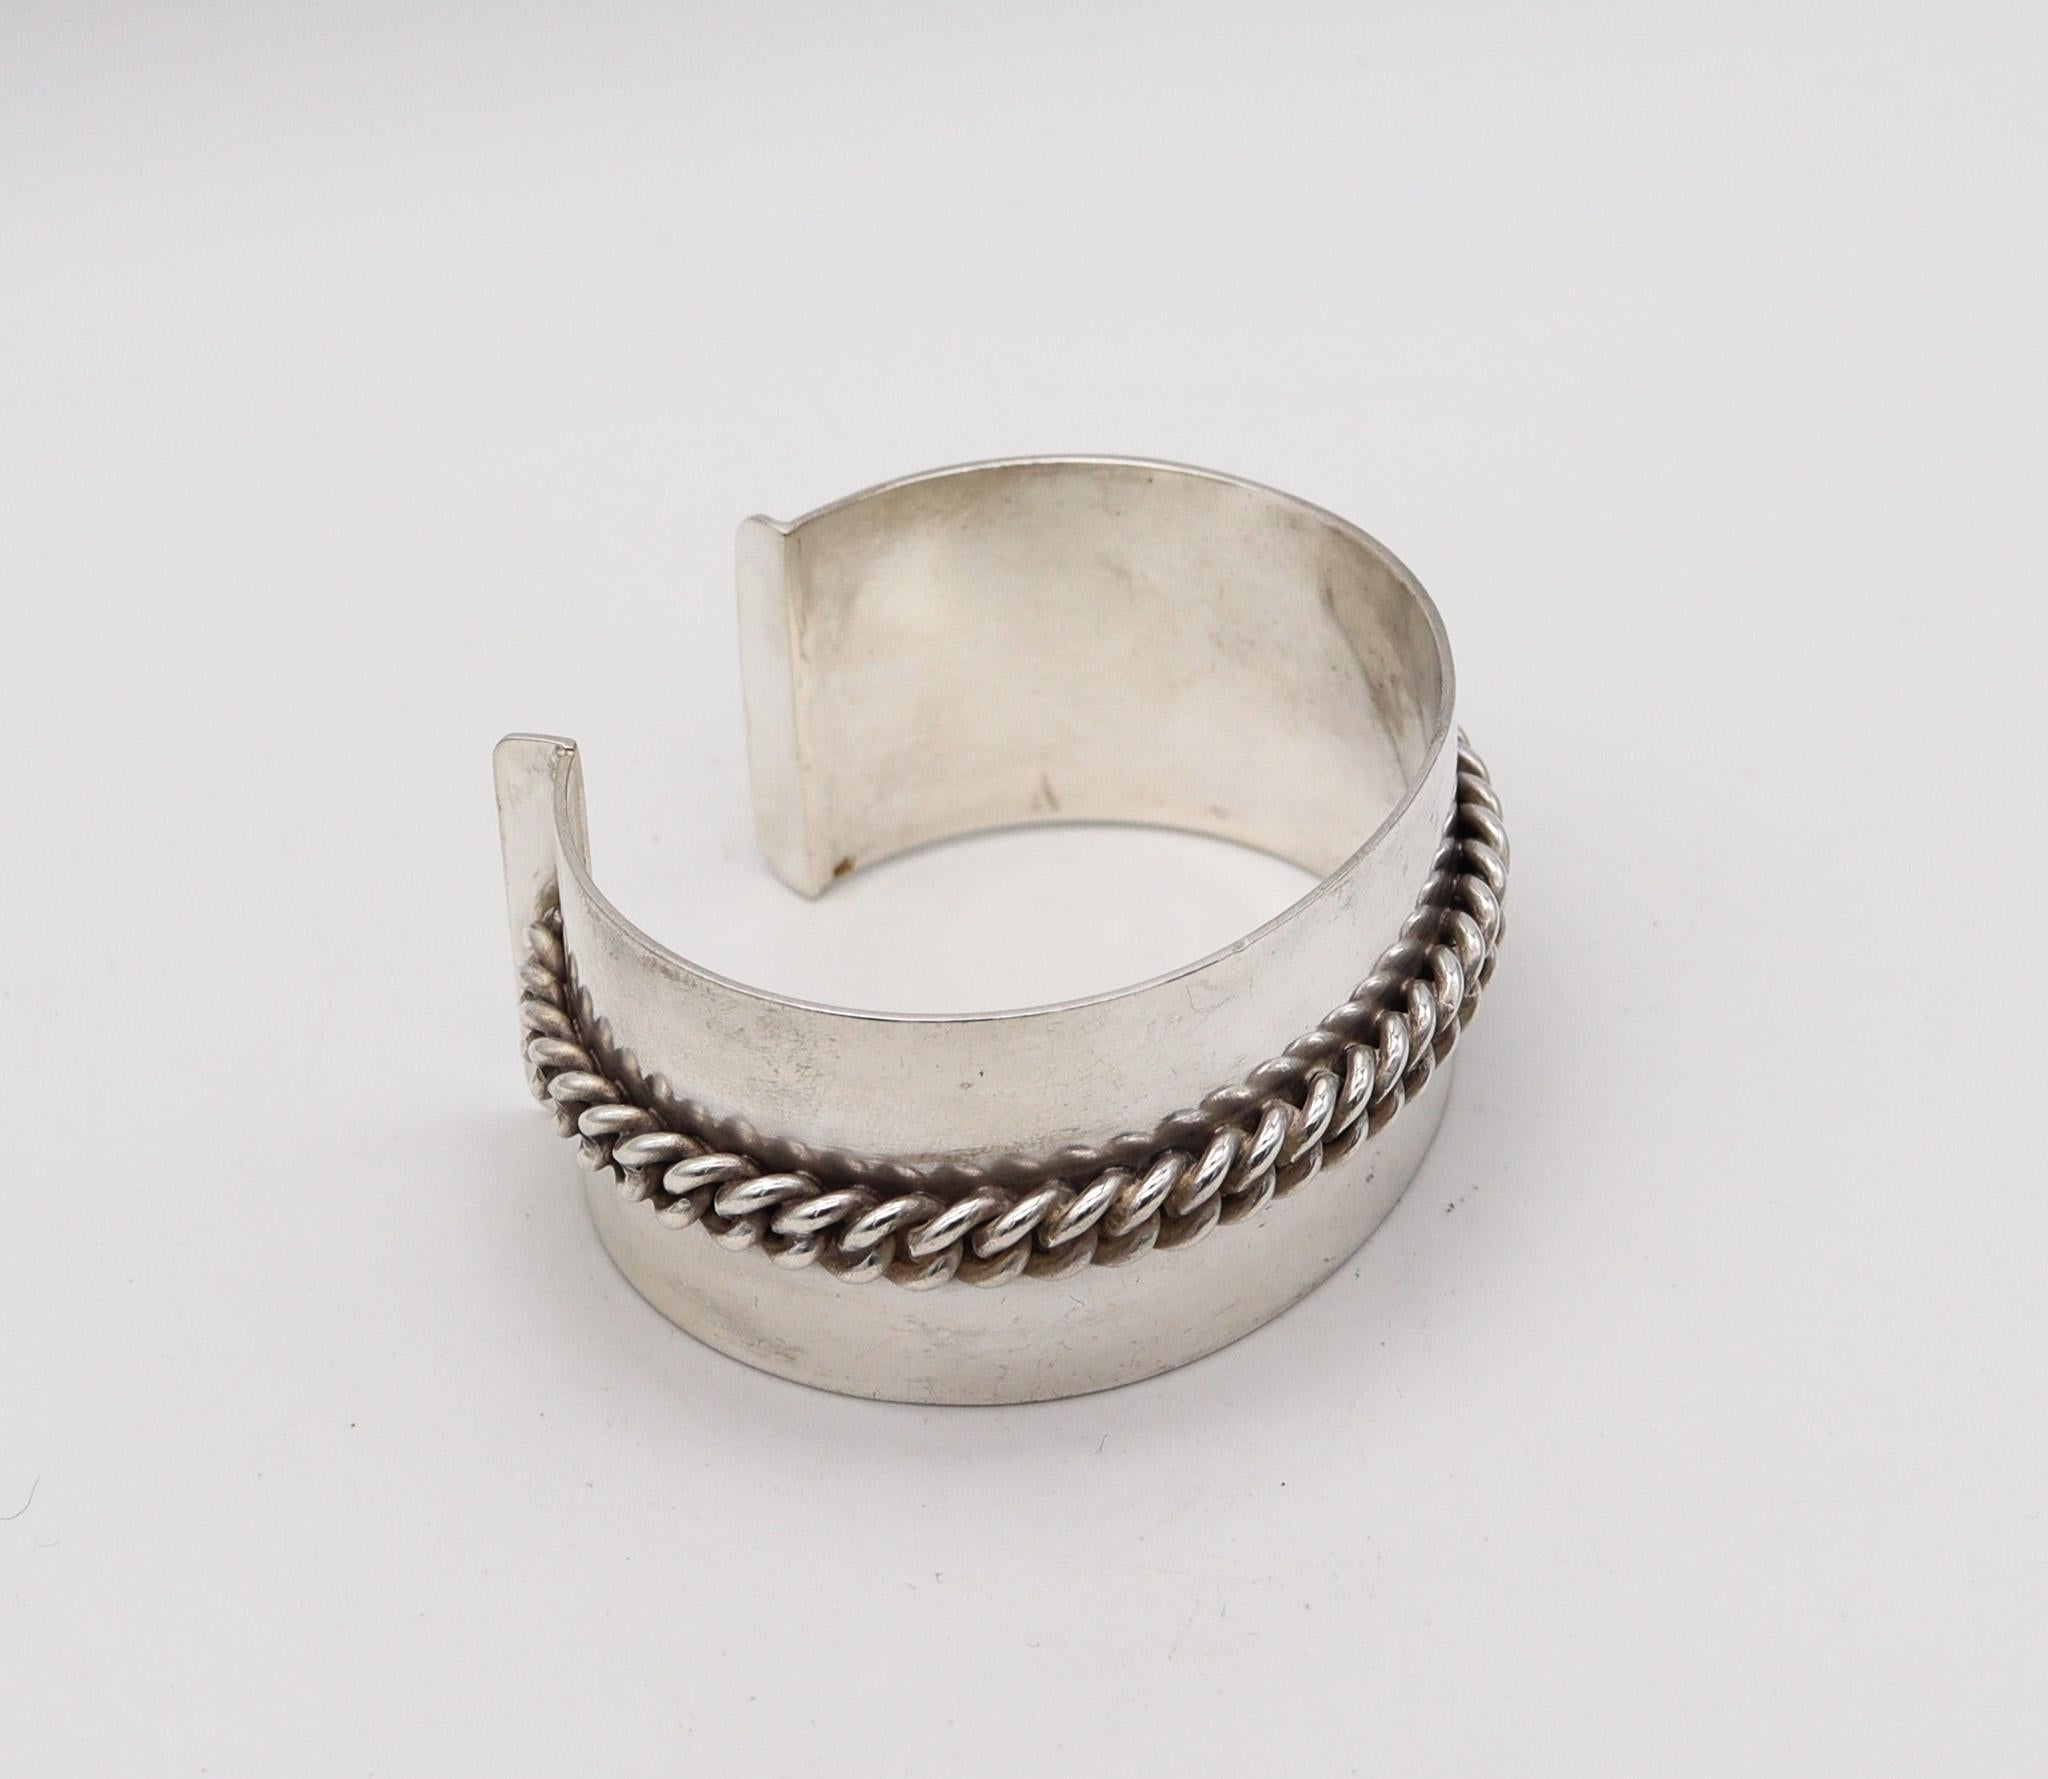 Retro Jean Després 1960 Paris Artistic Cuff Bracelet In .800 Silver With Chained Links For Sale